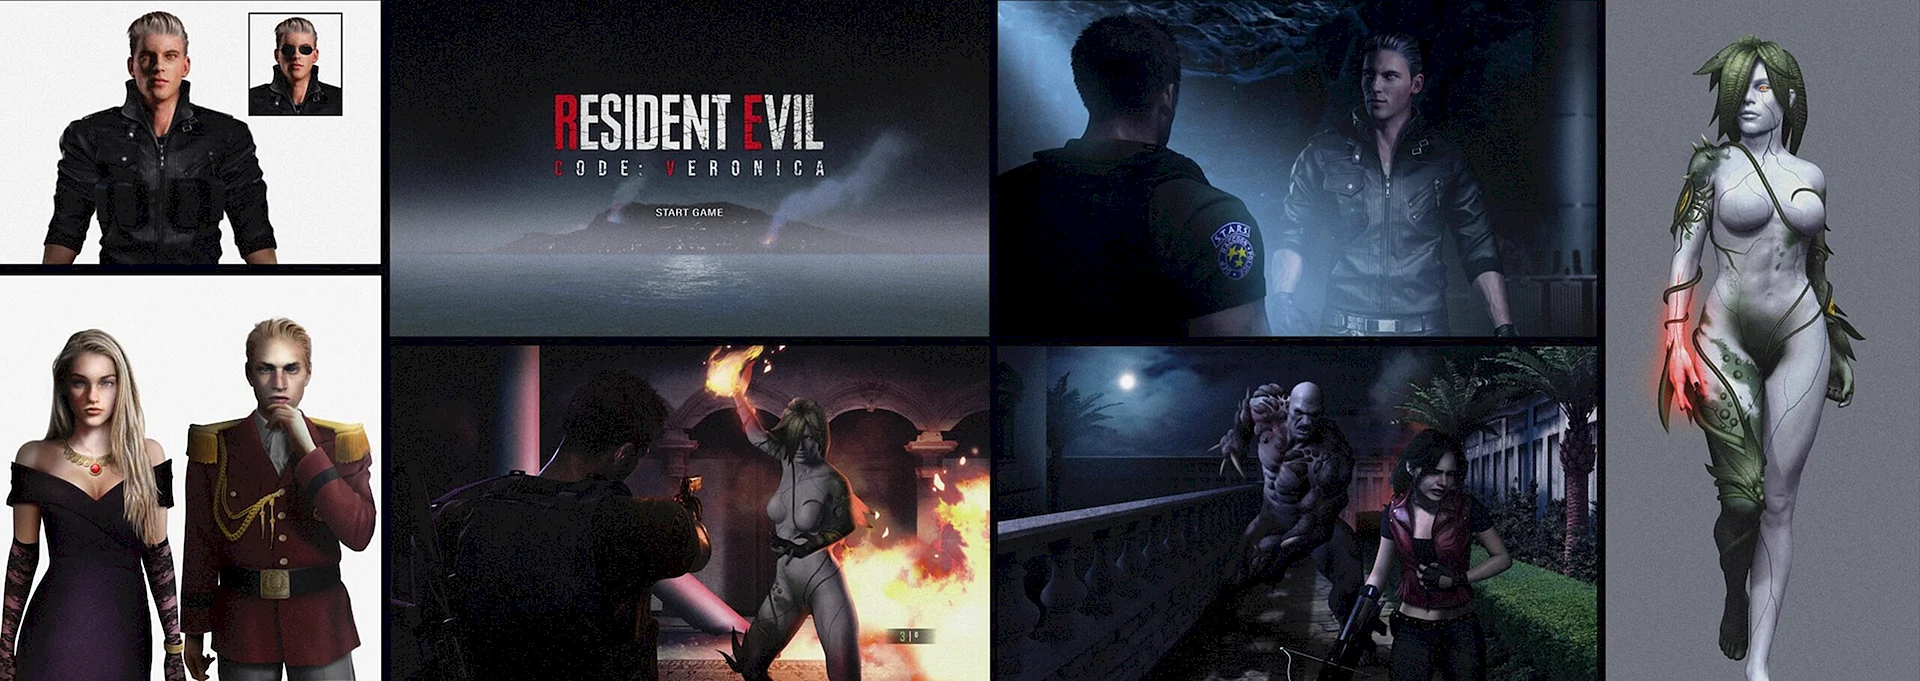 Resident Evil Code Veronica Remake Wallpaper